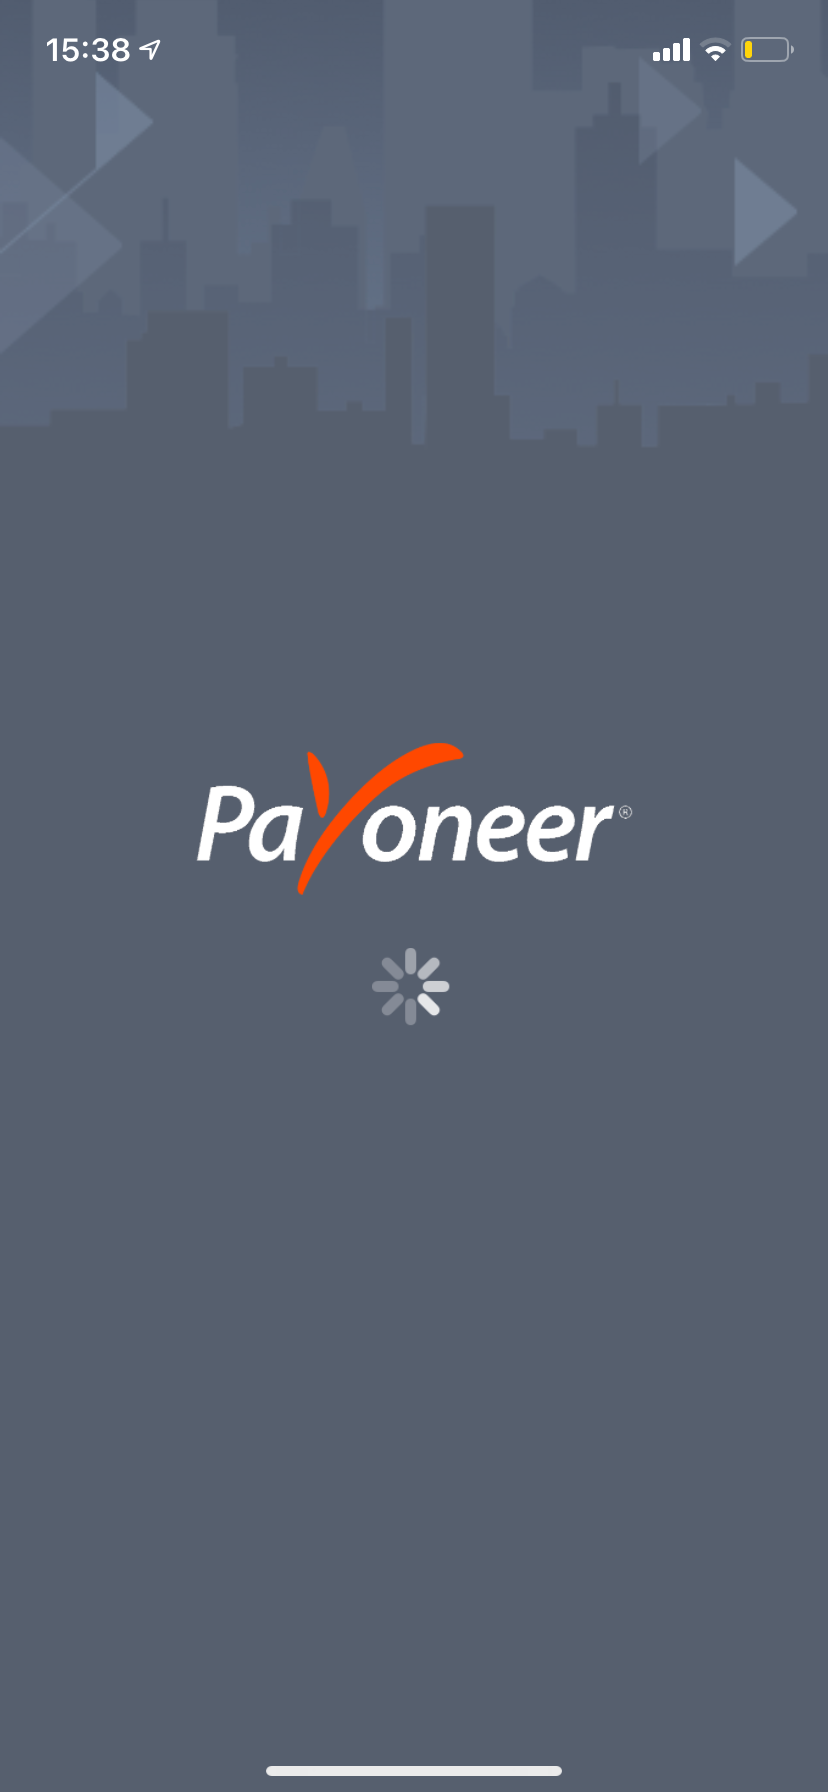 Payoneer app on iPhone